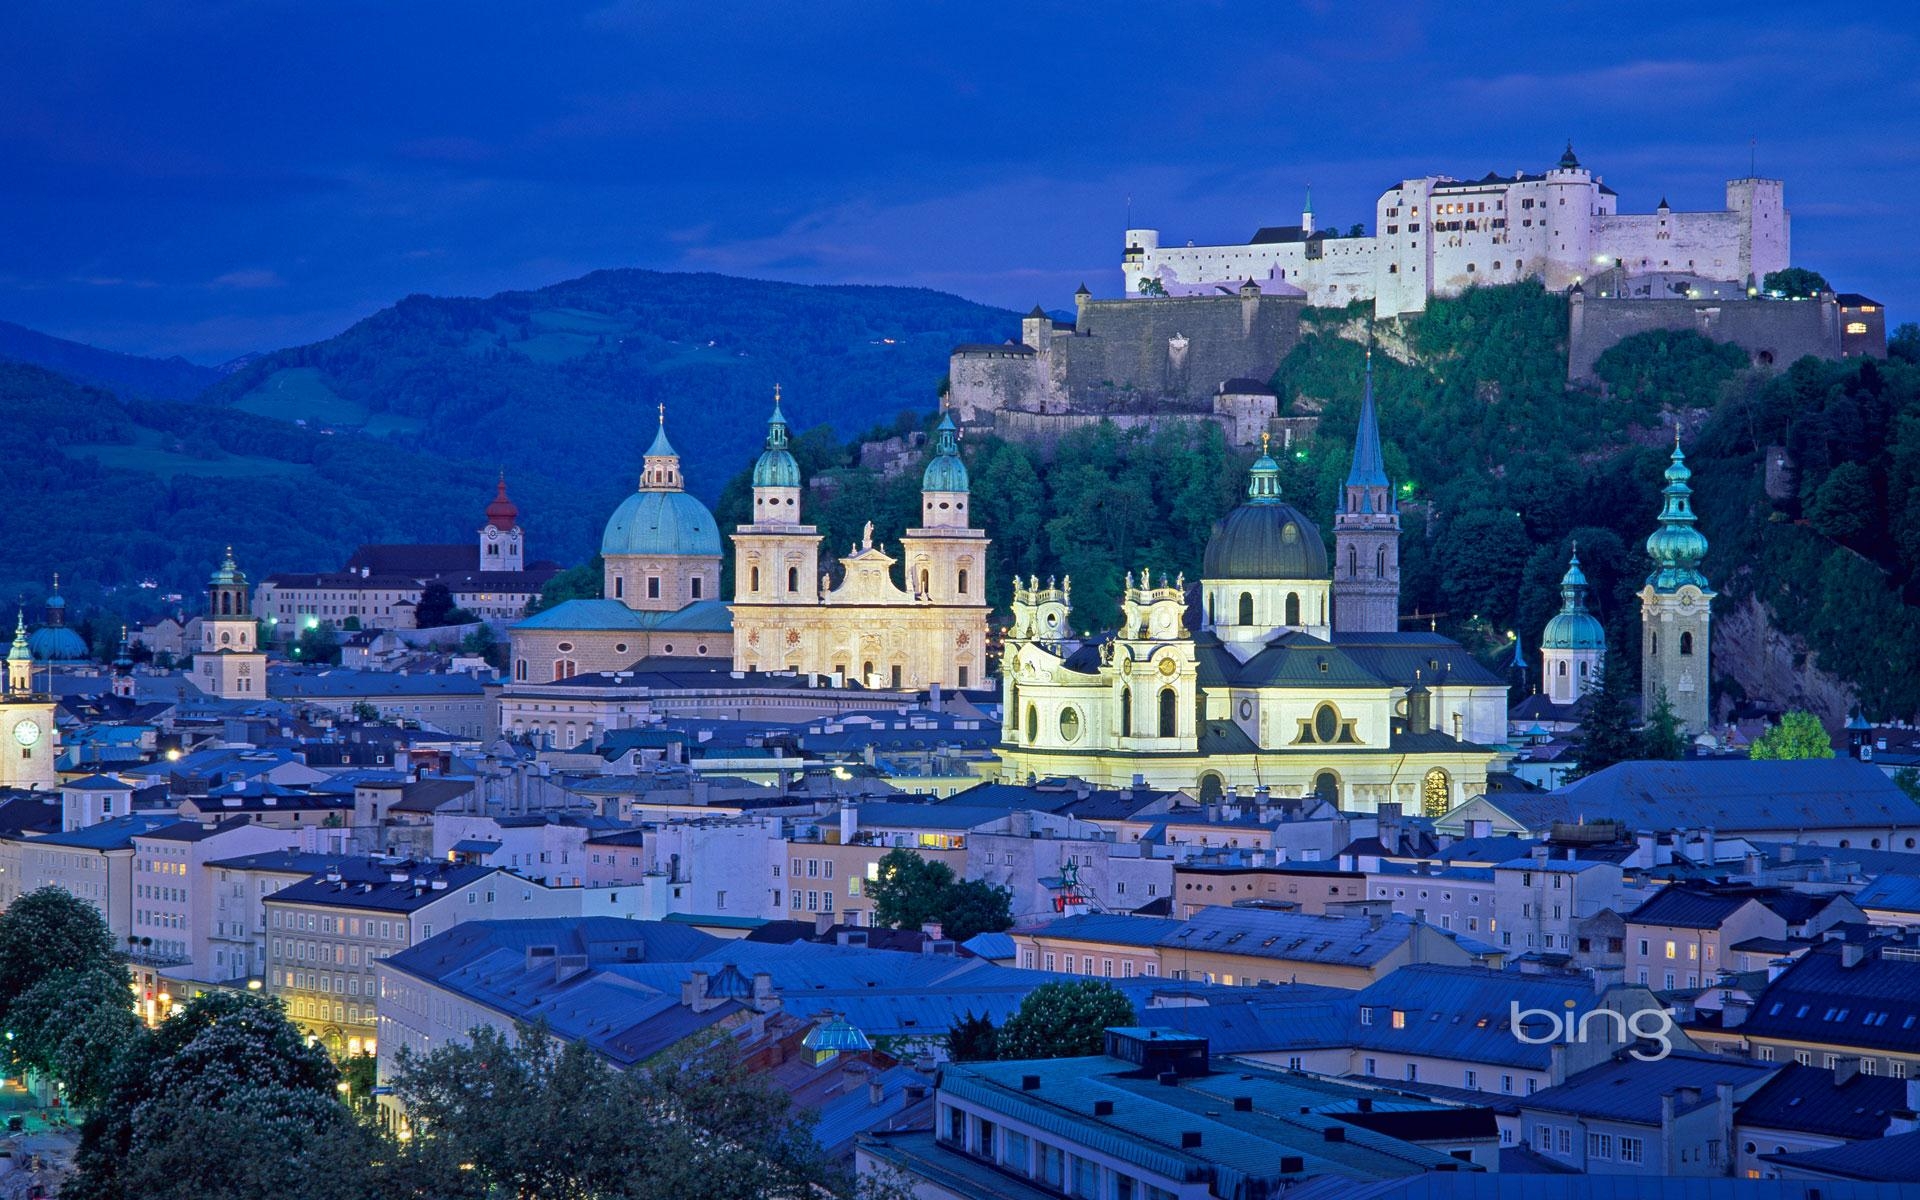 Bing - Austria Salzburg , HD Wallpaper & Backgrounds